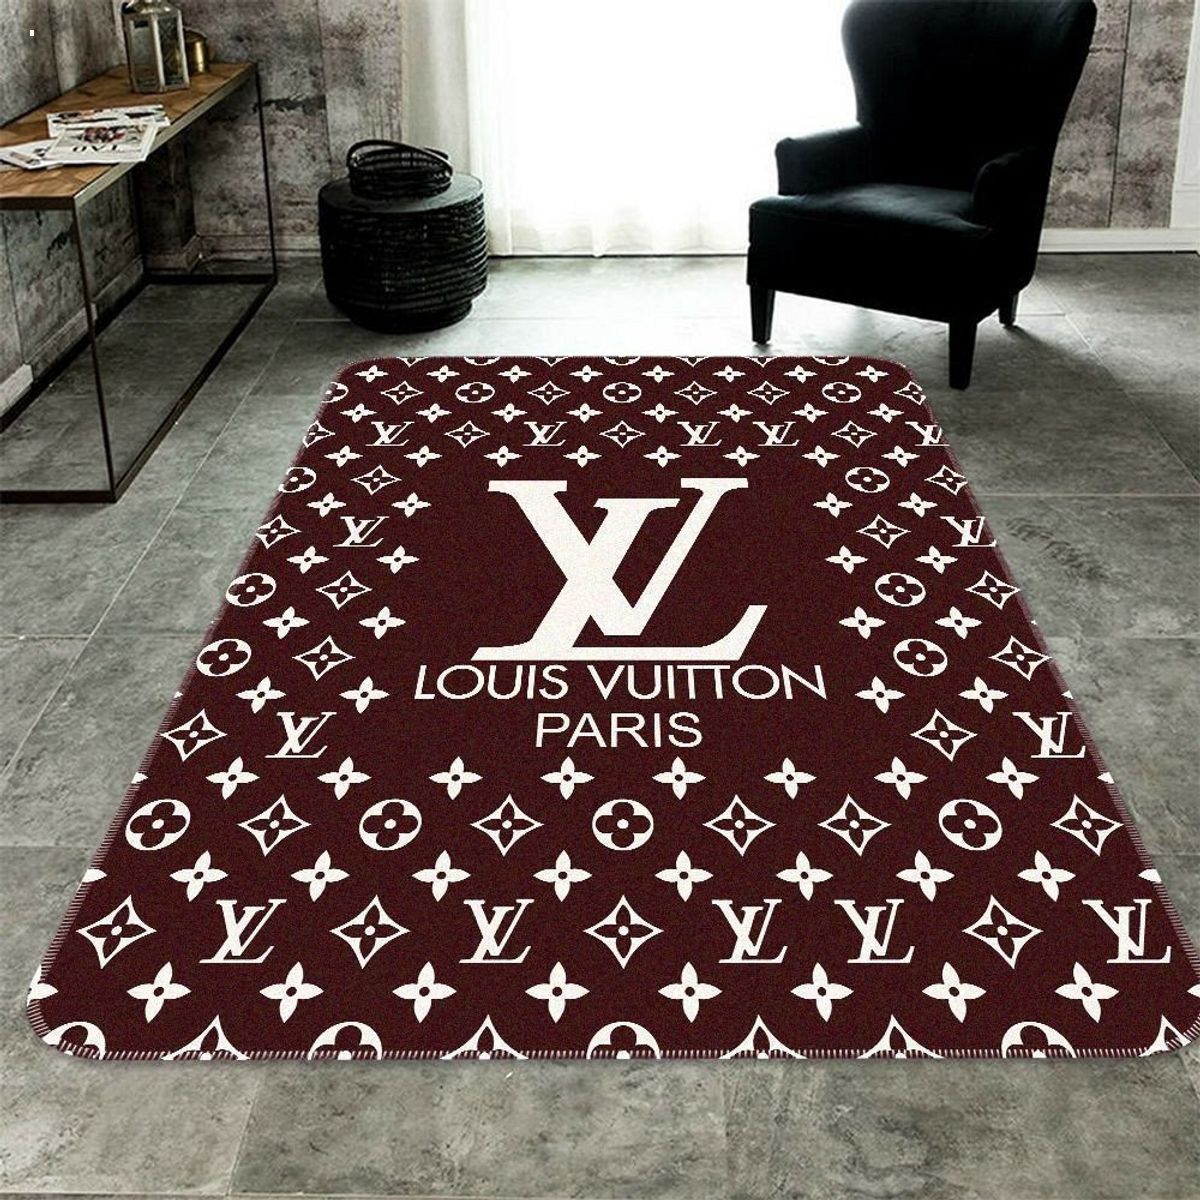 Louis Vuitton Paris Printing Logo Luxury Brand Carpet Rug Limited Edition